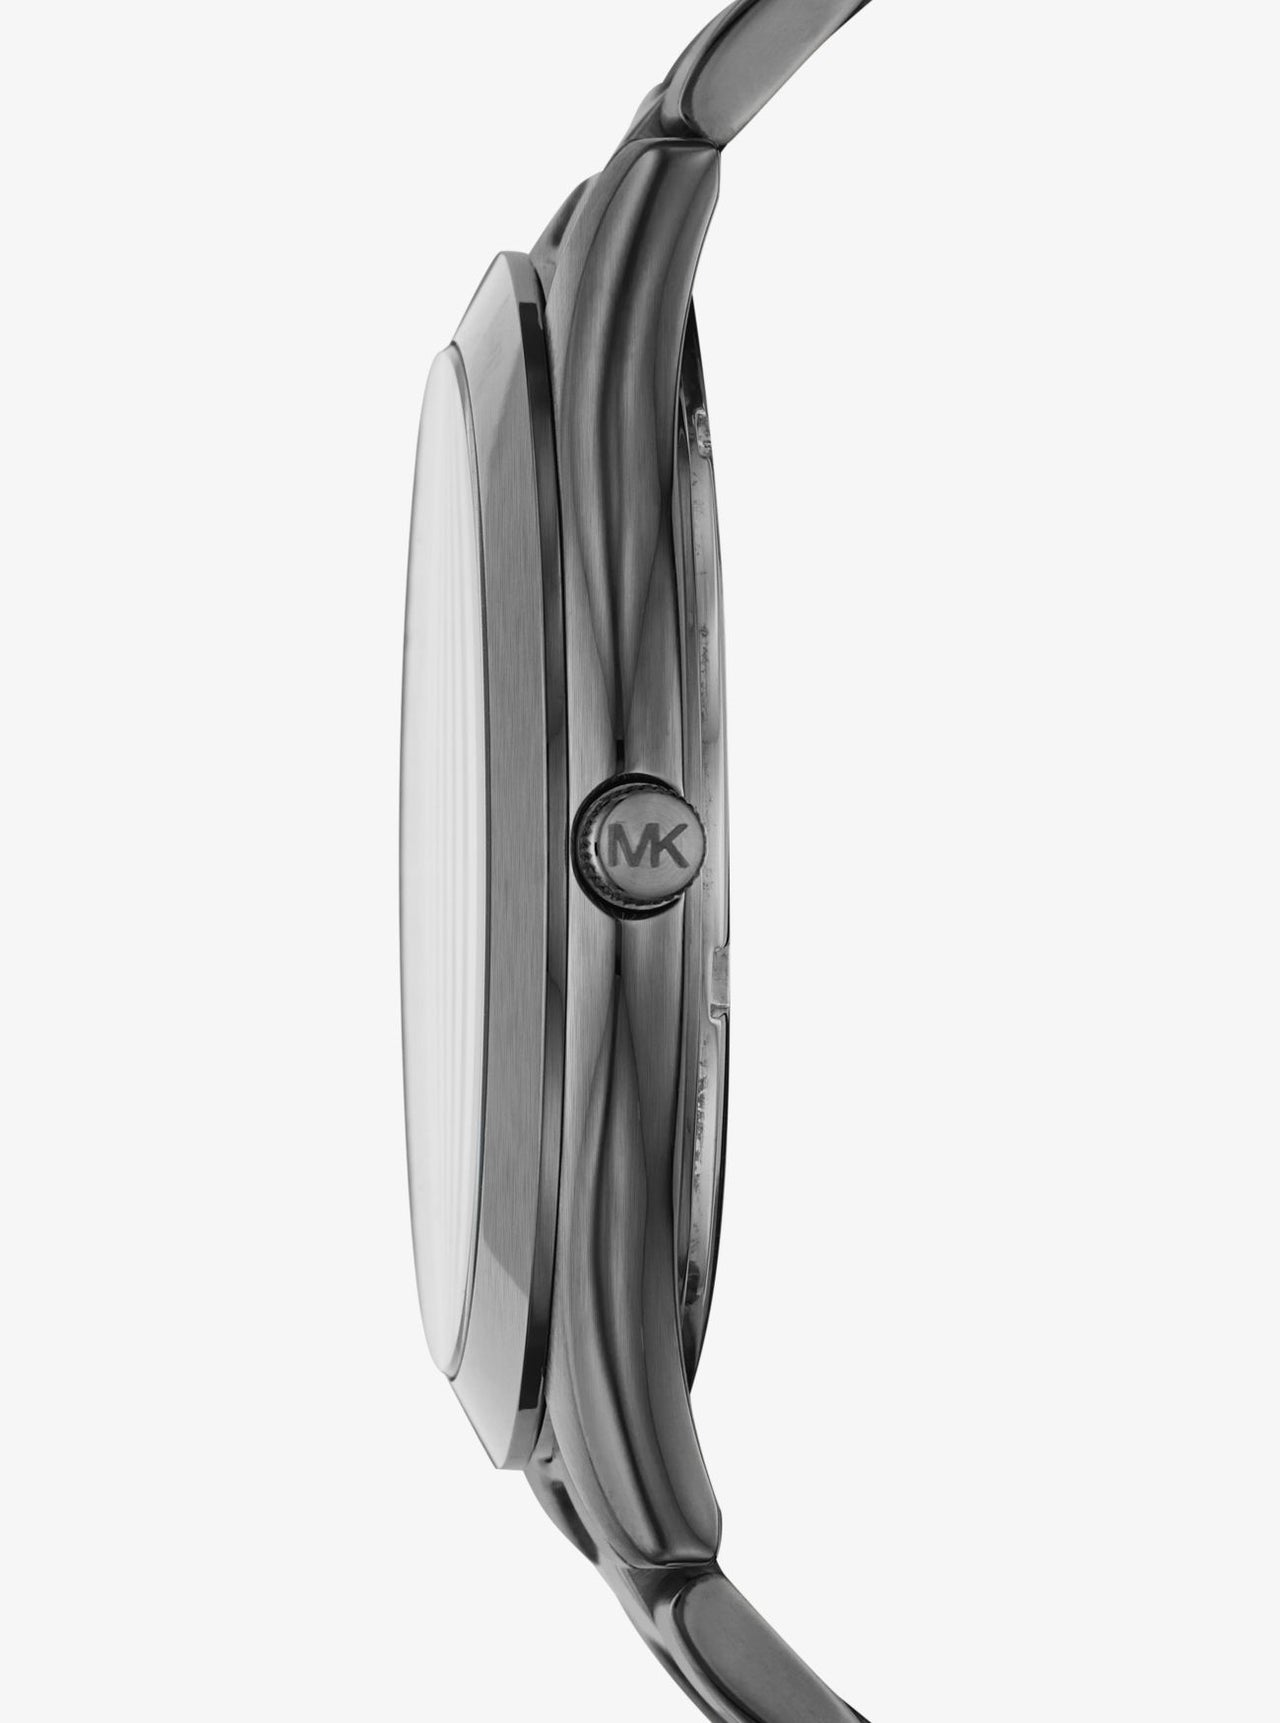 Michael Kors Men's Gunmetal 44mm Watch MK1044